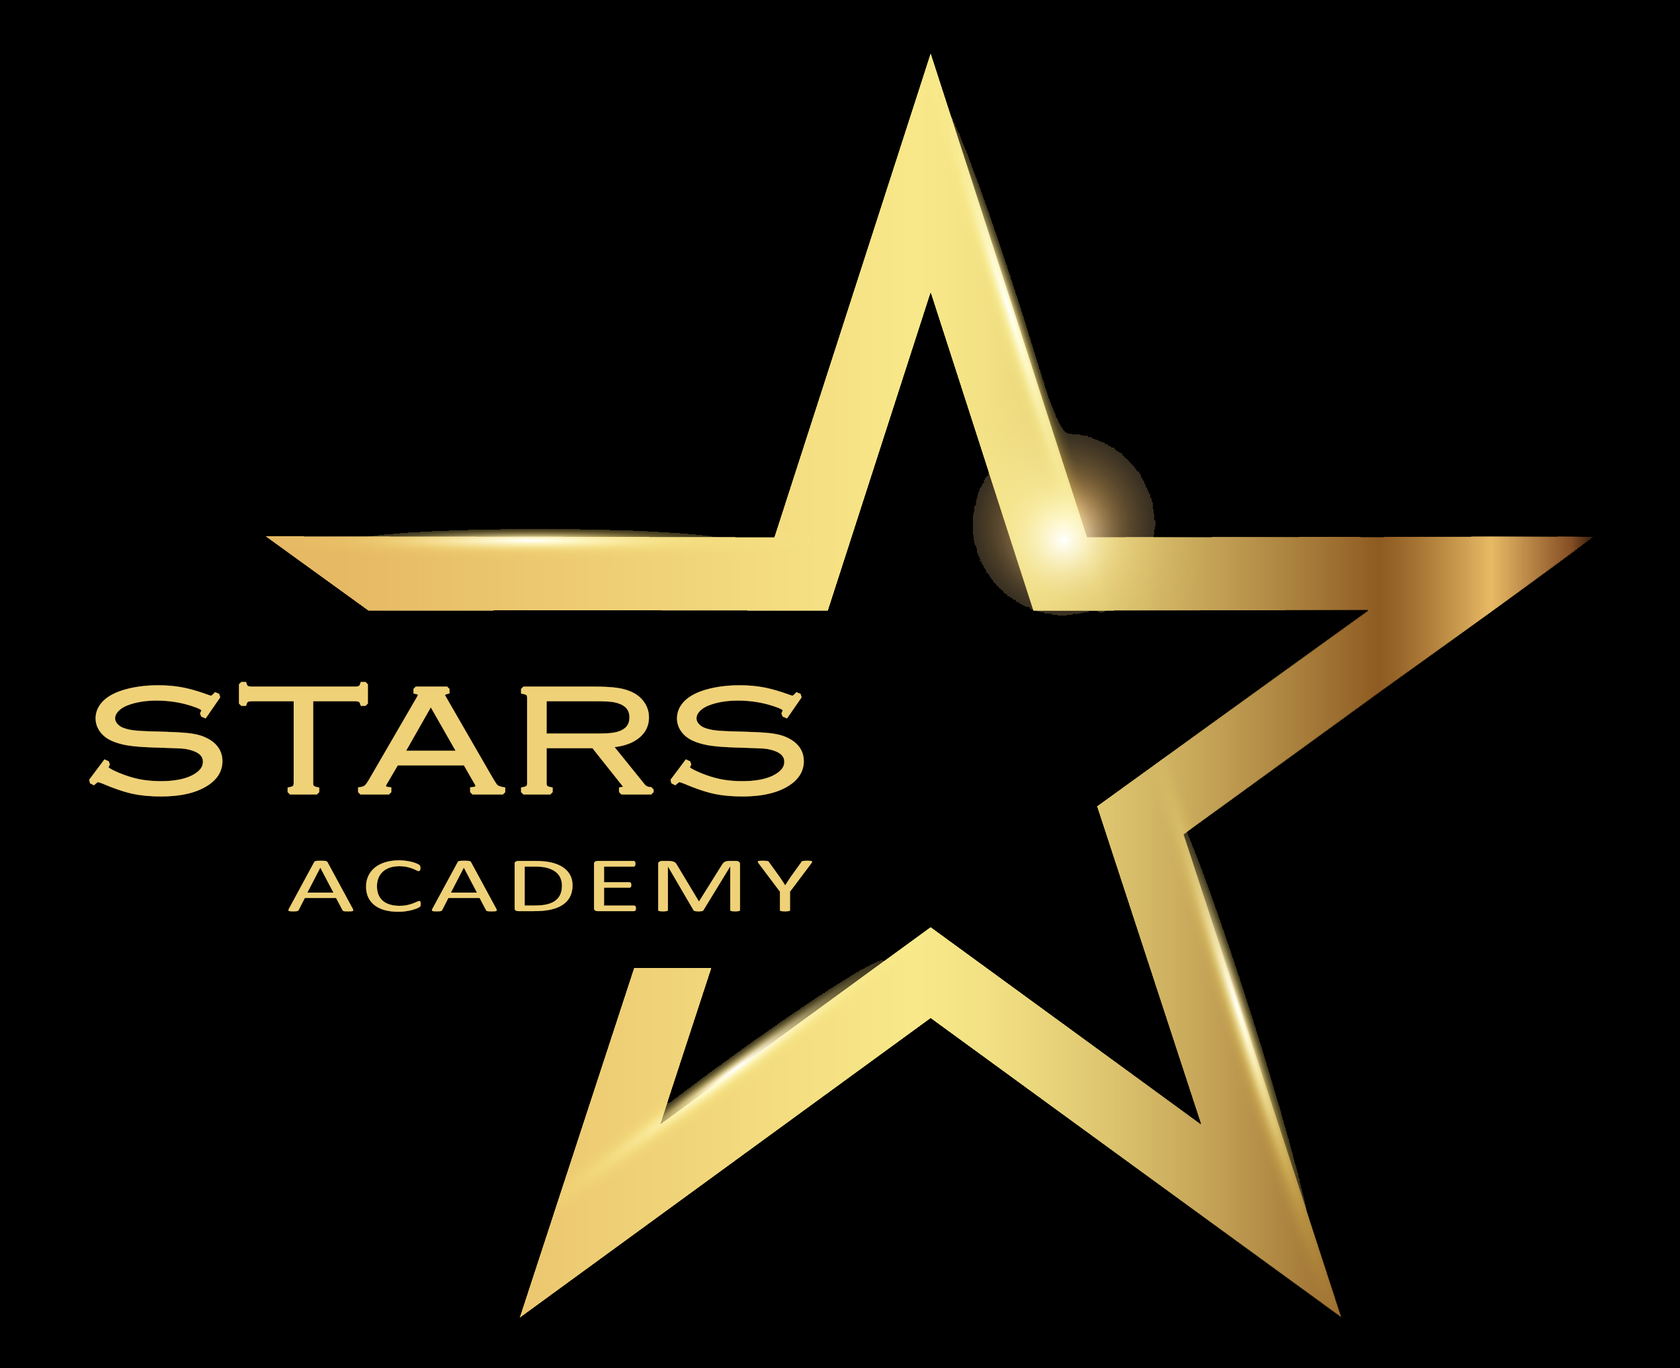 Star logo png. Звезда логотип. Красивая звезда для логотипа. Академия звезд. Знаменитости логотип.